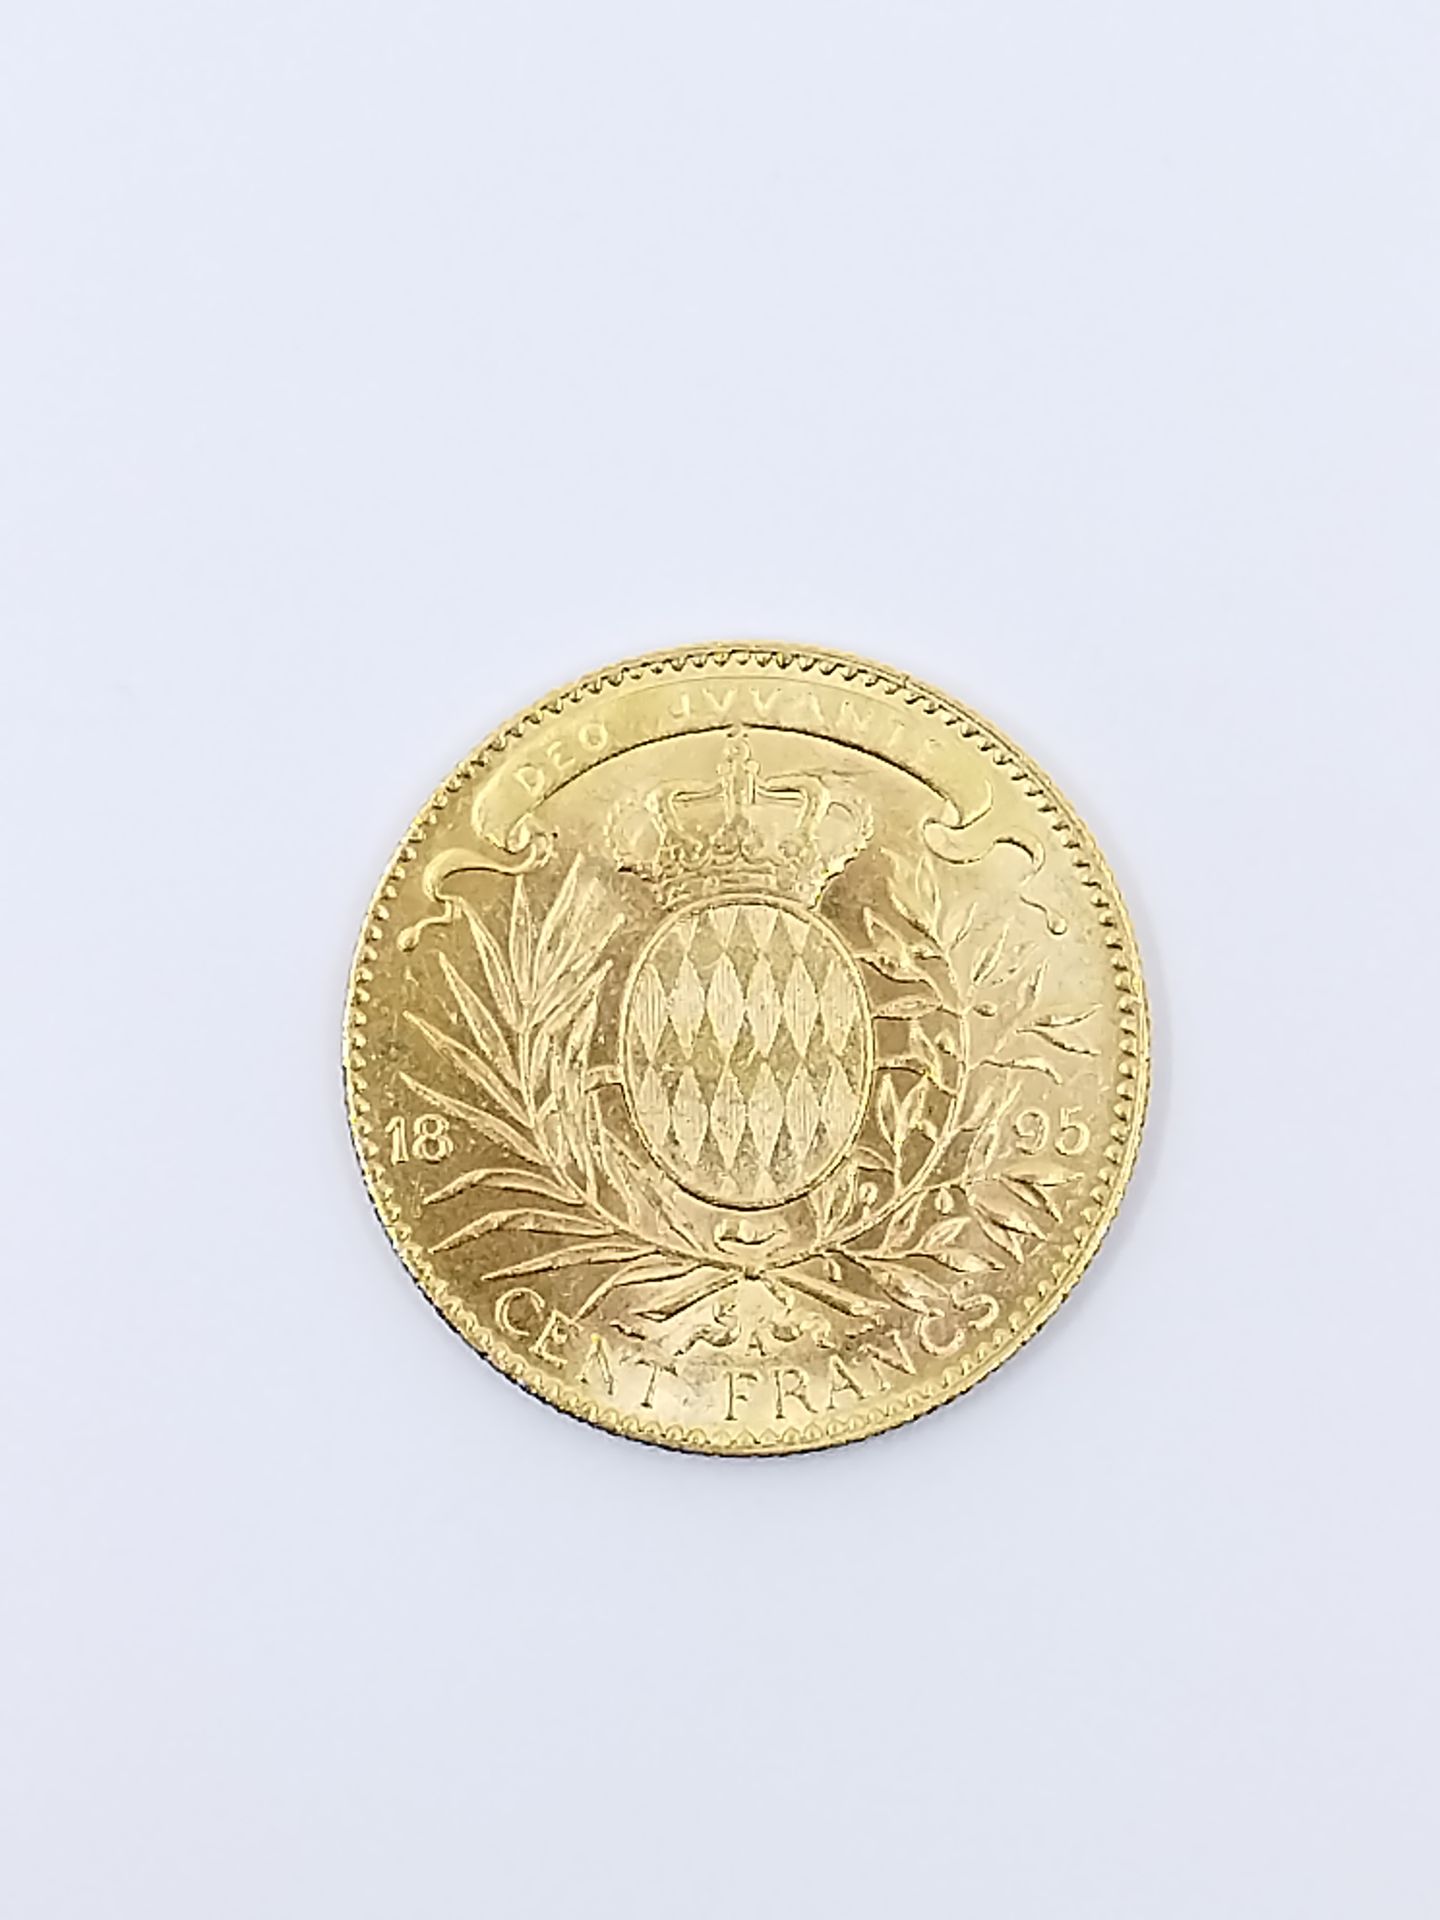 Null PIECE de 100 francs Albert Ier or Prince de Monaco 1895.

Gewicht: 32,3 g